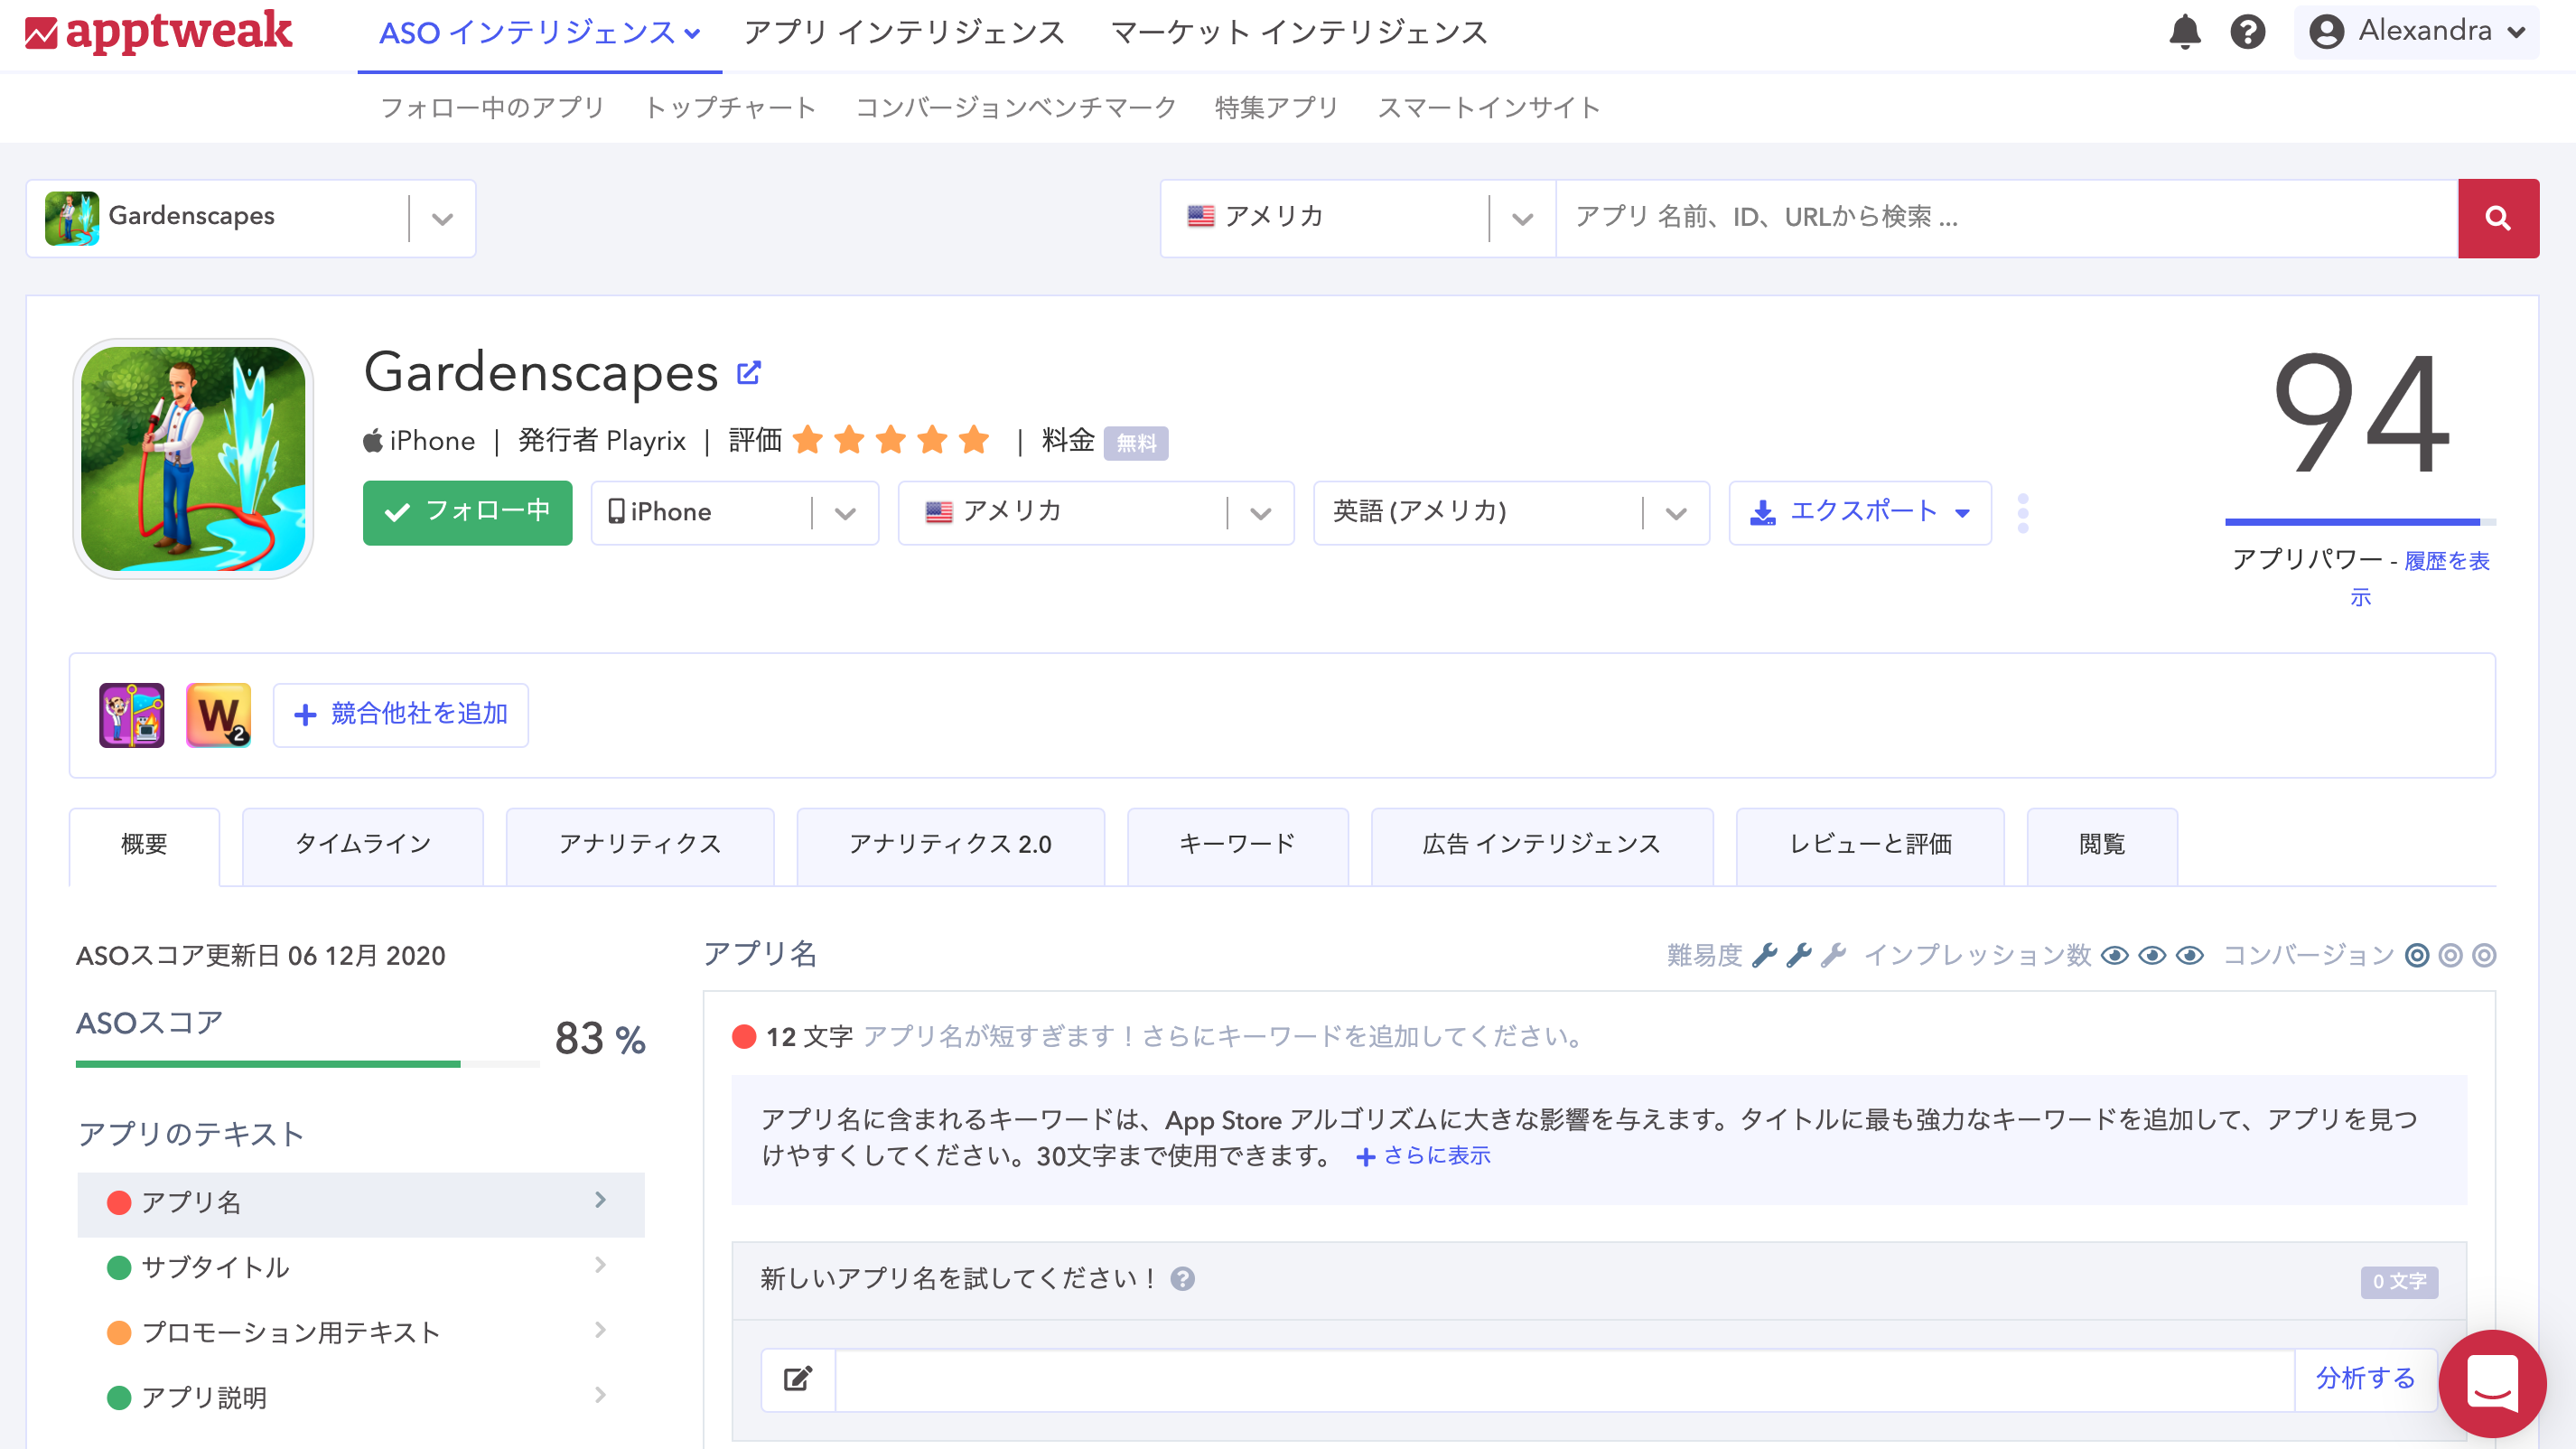 AppTweak dashboard in japanese